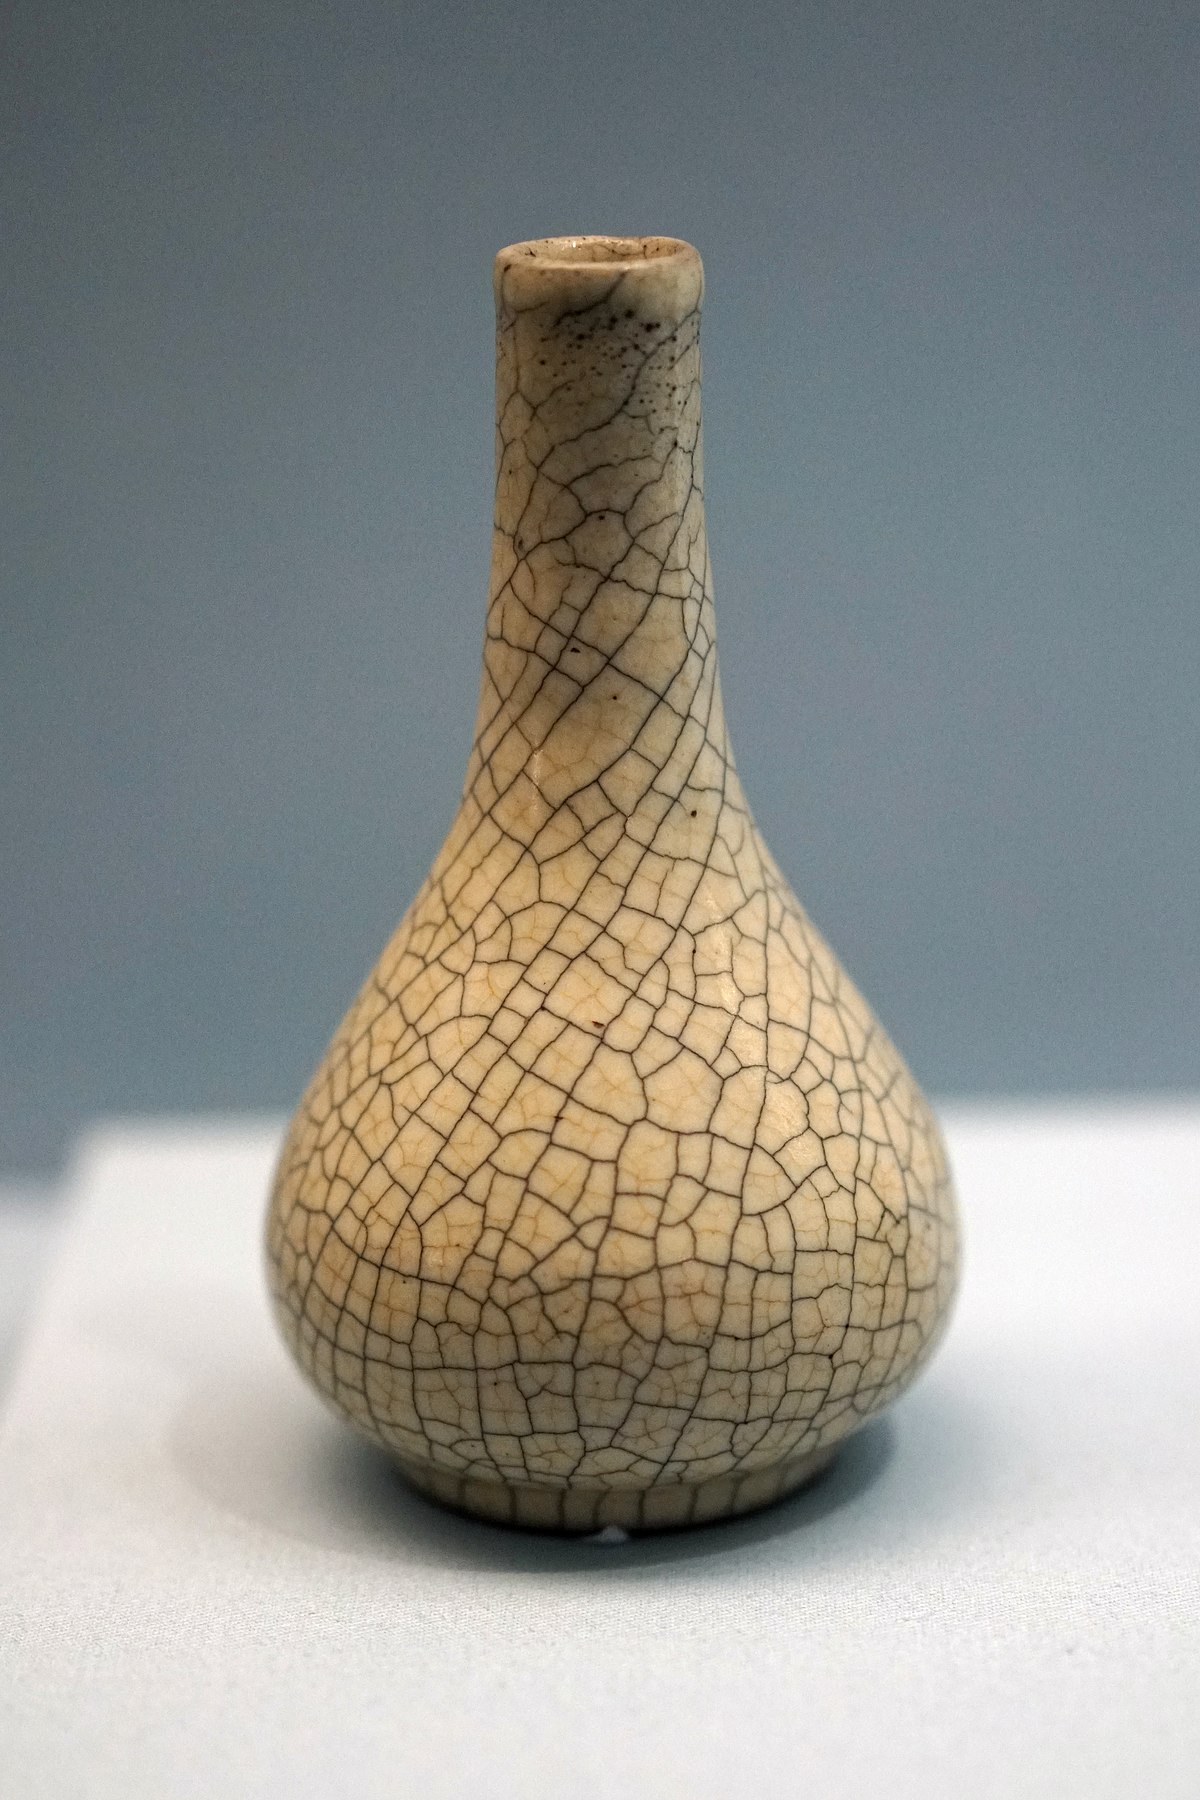 File:哥窑灰青釉胆式瓶08908.jpg - Wikimedia Commons